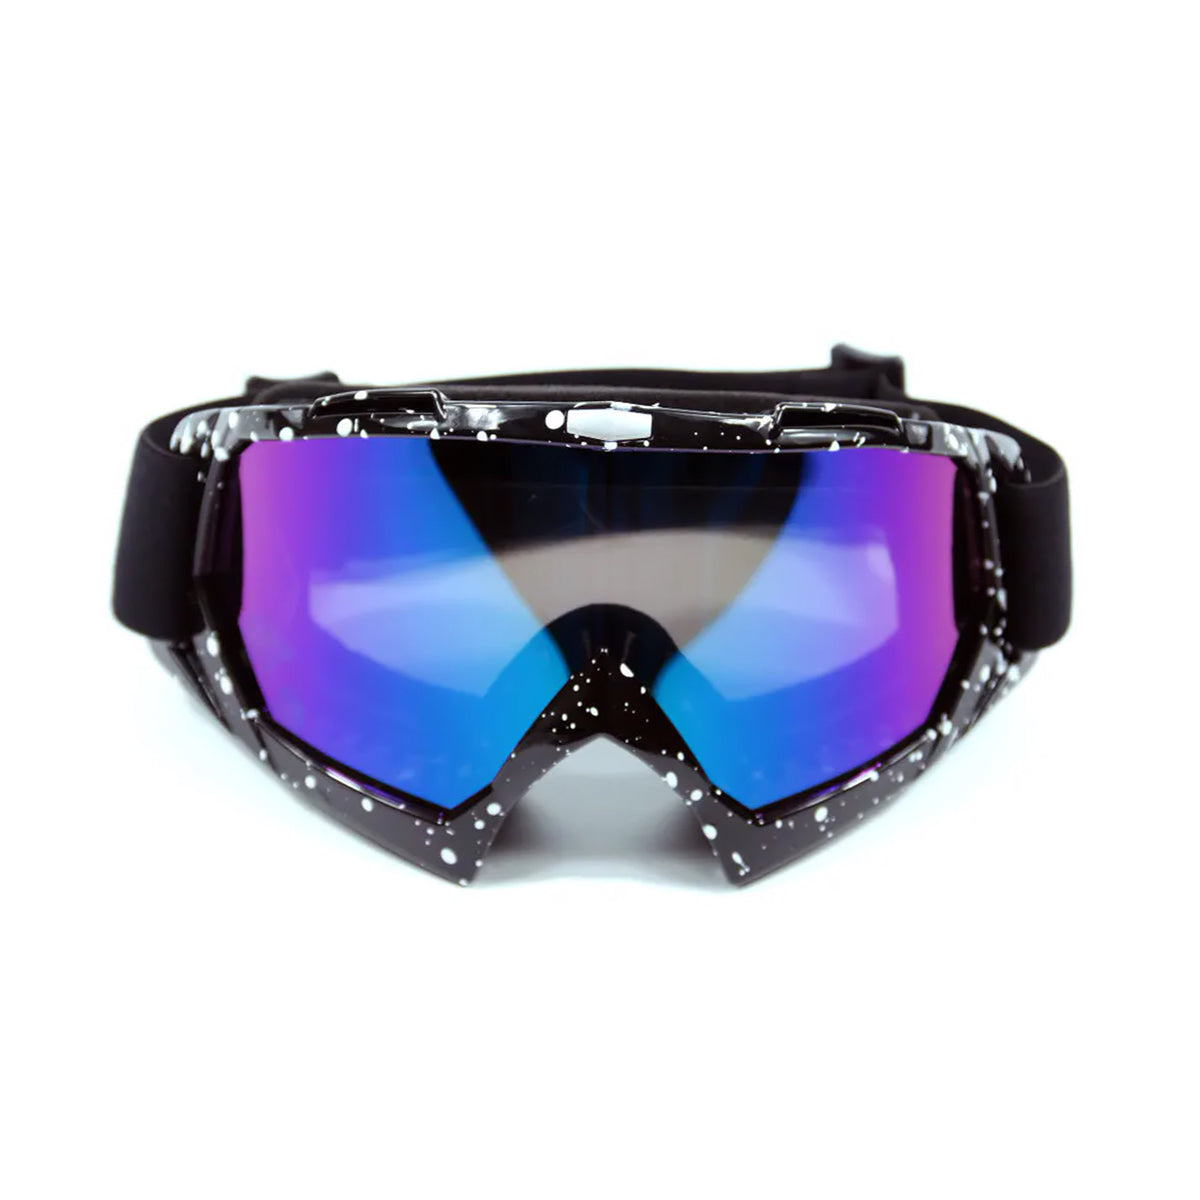 Goggles 4 Motocross,Ski Snowboard,Dirt Bike Riding